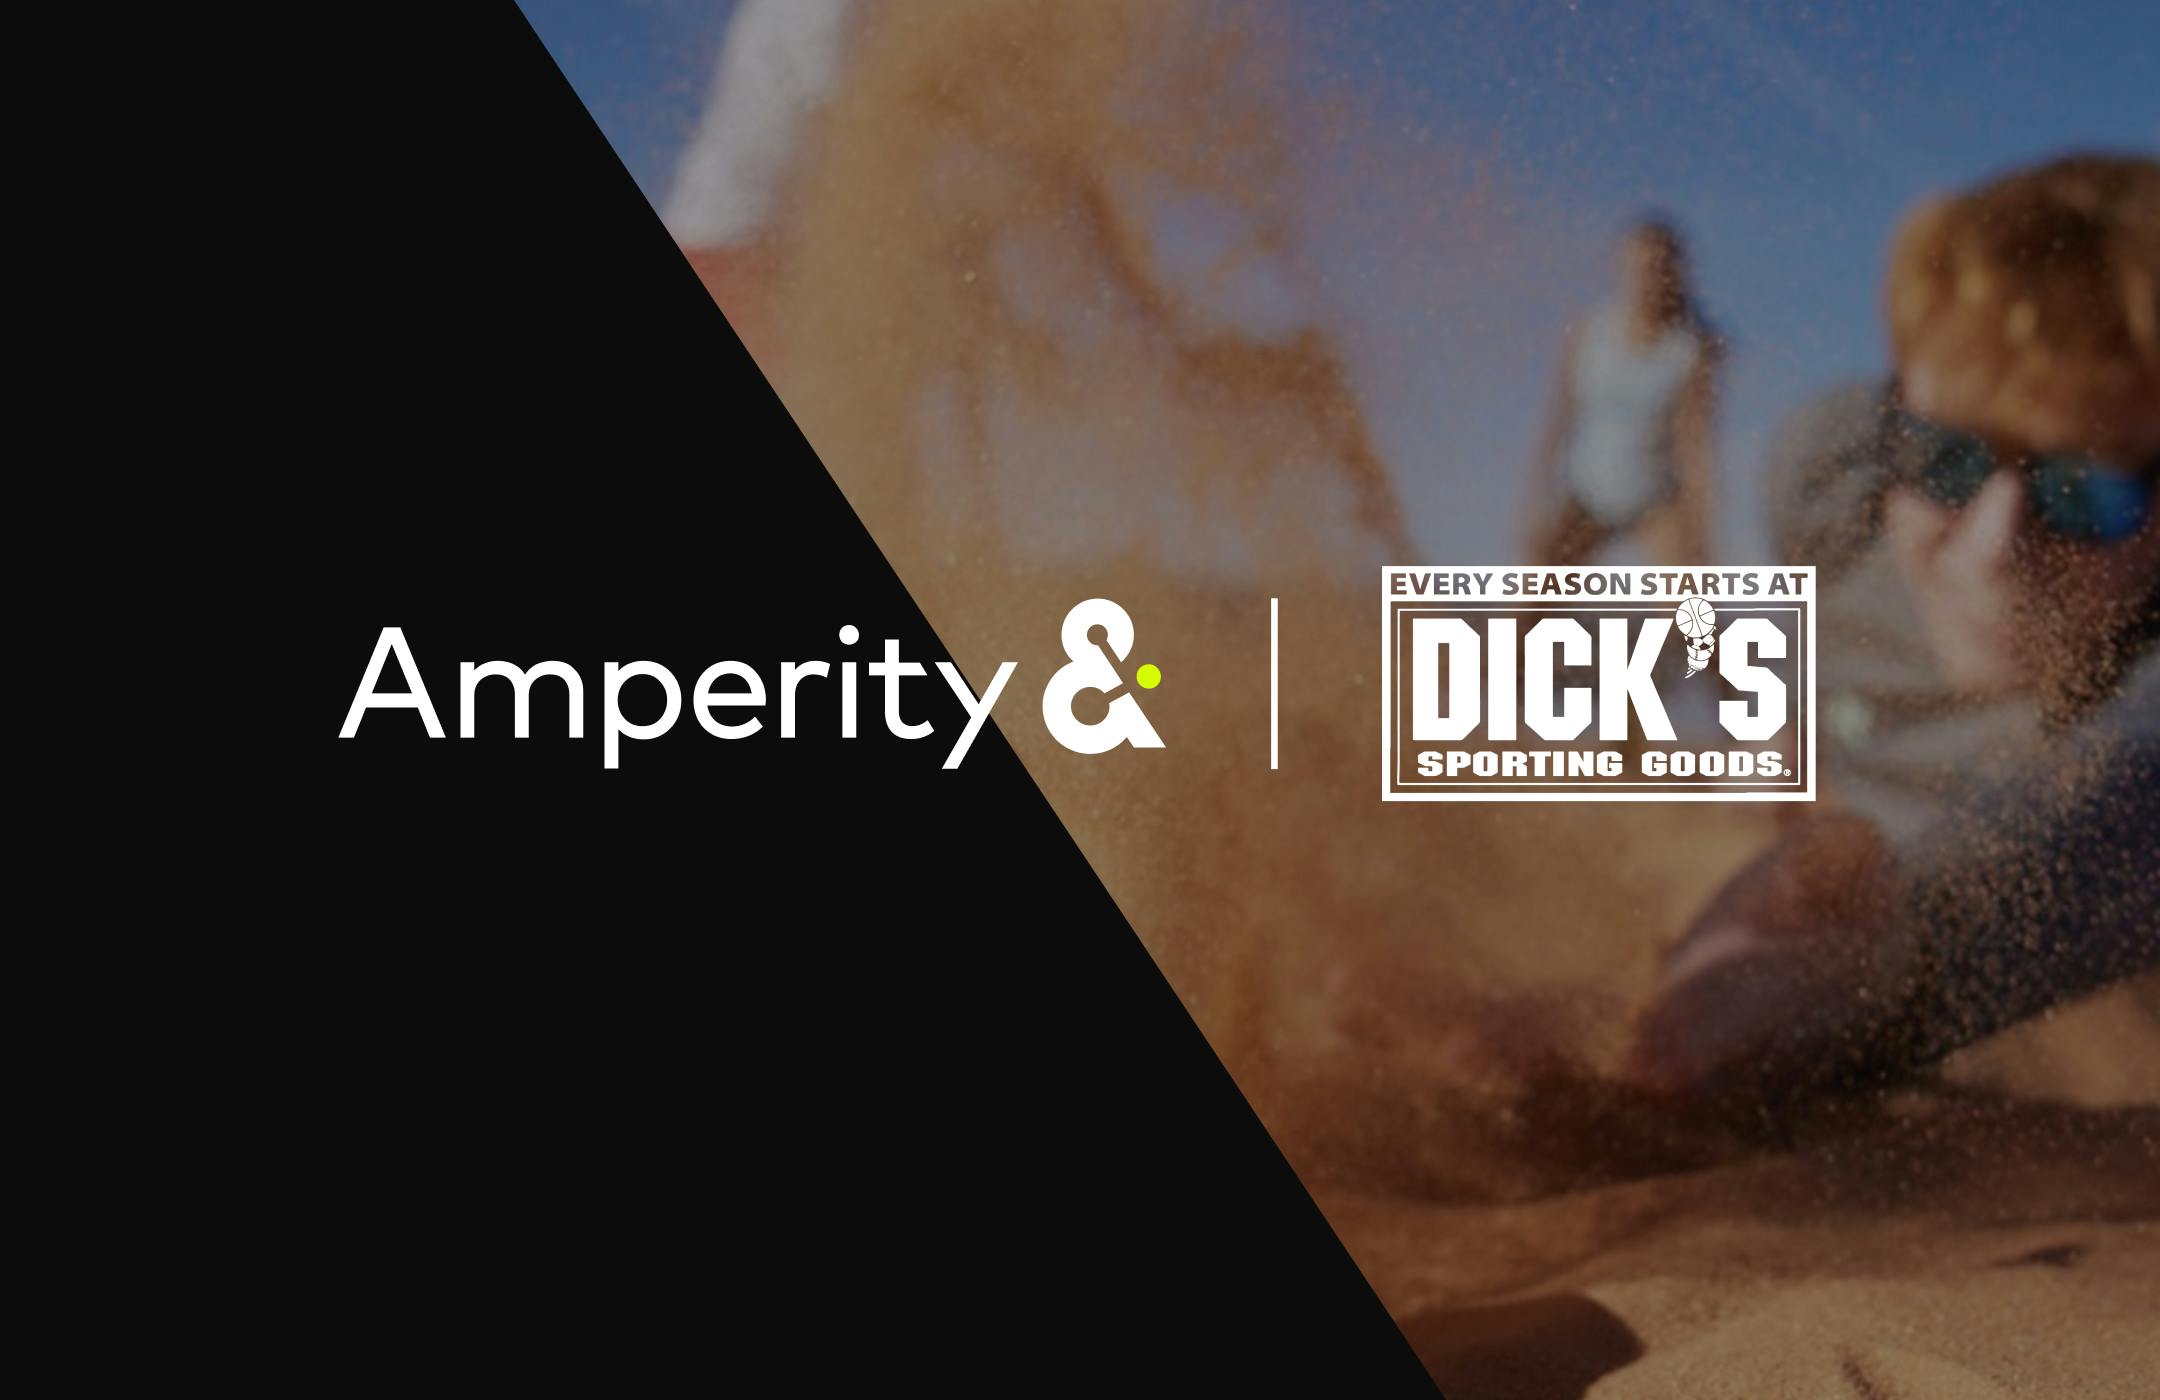 Amperity & DICK'S Sporting Goods